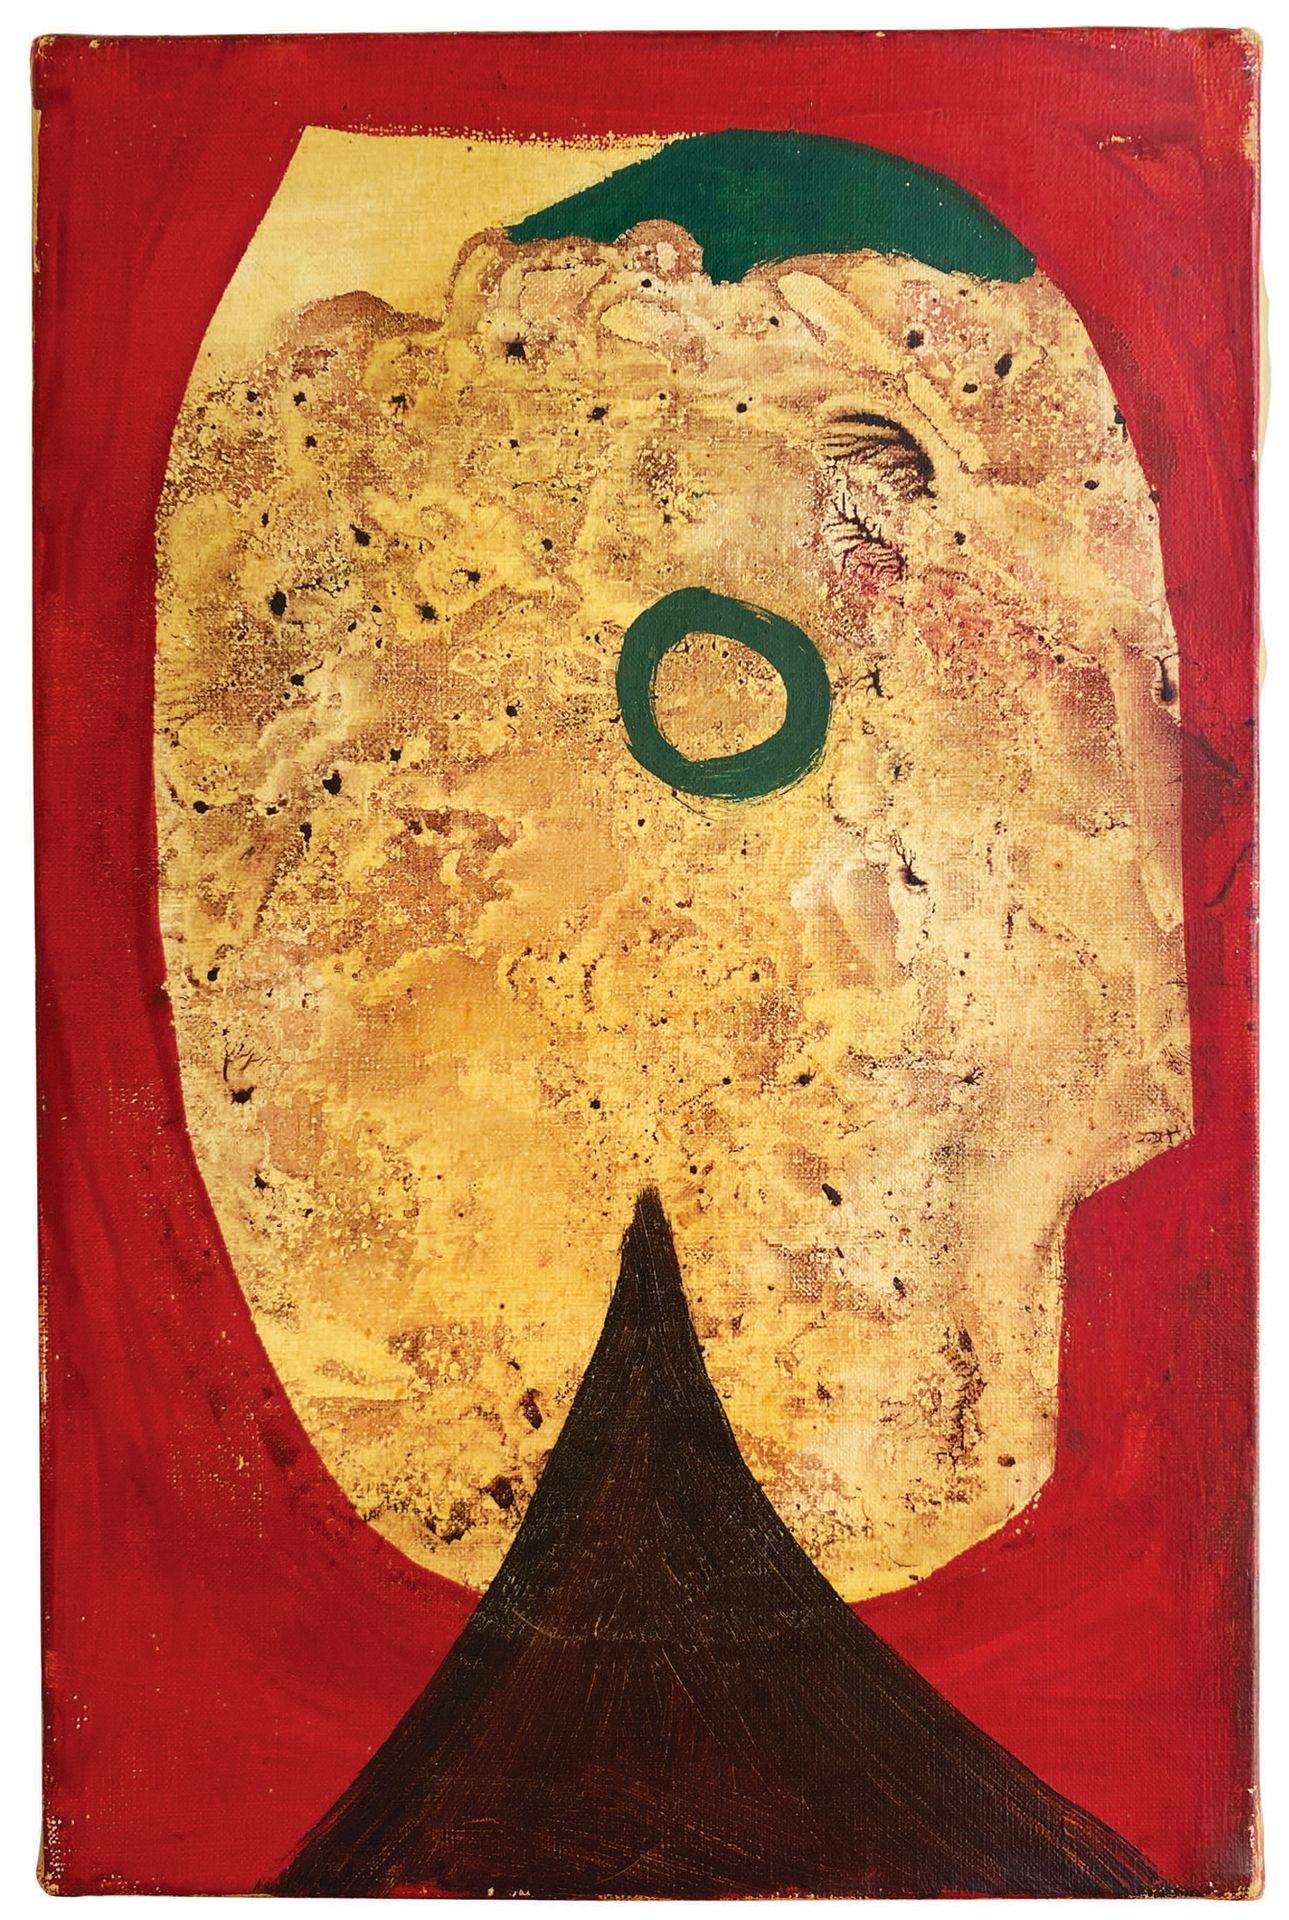 Oscar DOMINGUEZ. 无题。1957 ?
布面油画（23,8 x 15,7厘米）。
美丽的超现实主义布面油画构图。
背面有手写说明："多明戈斯57号&hellip;